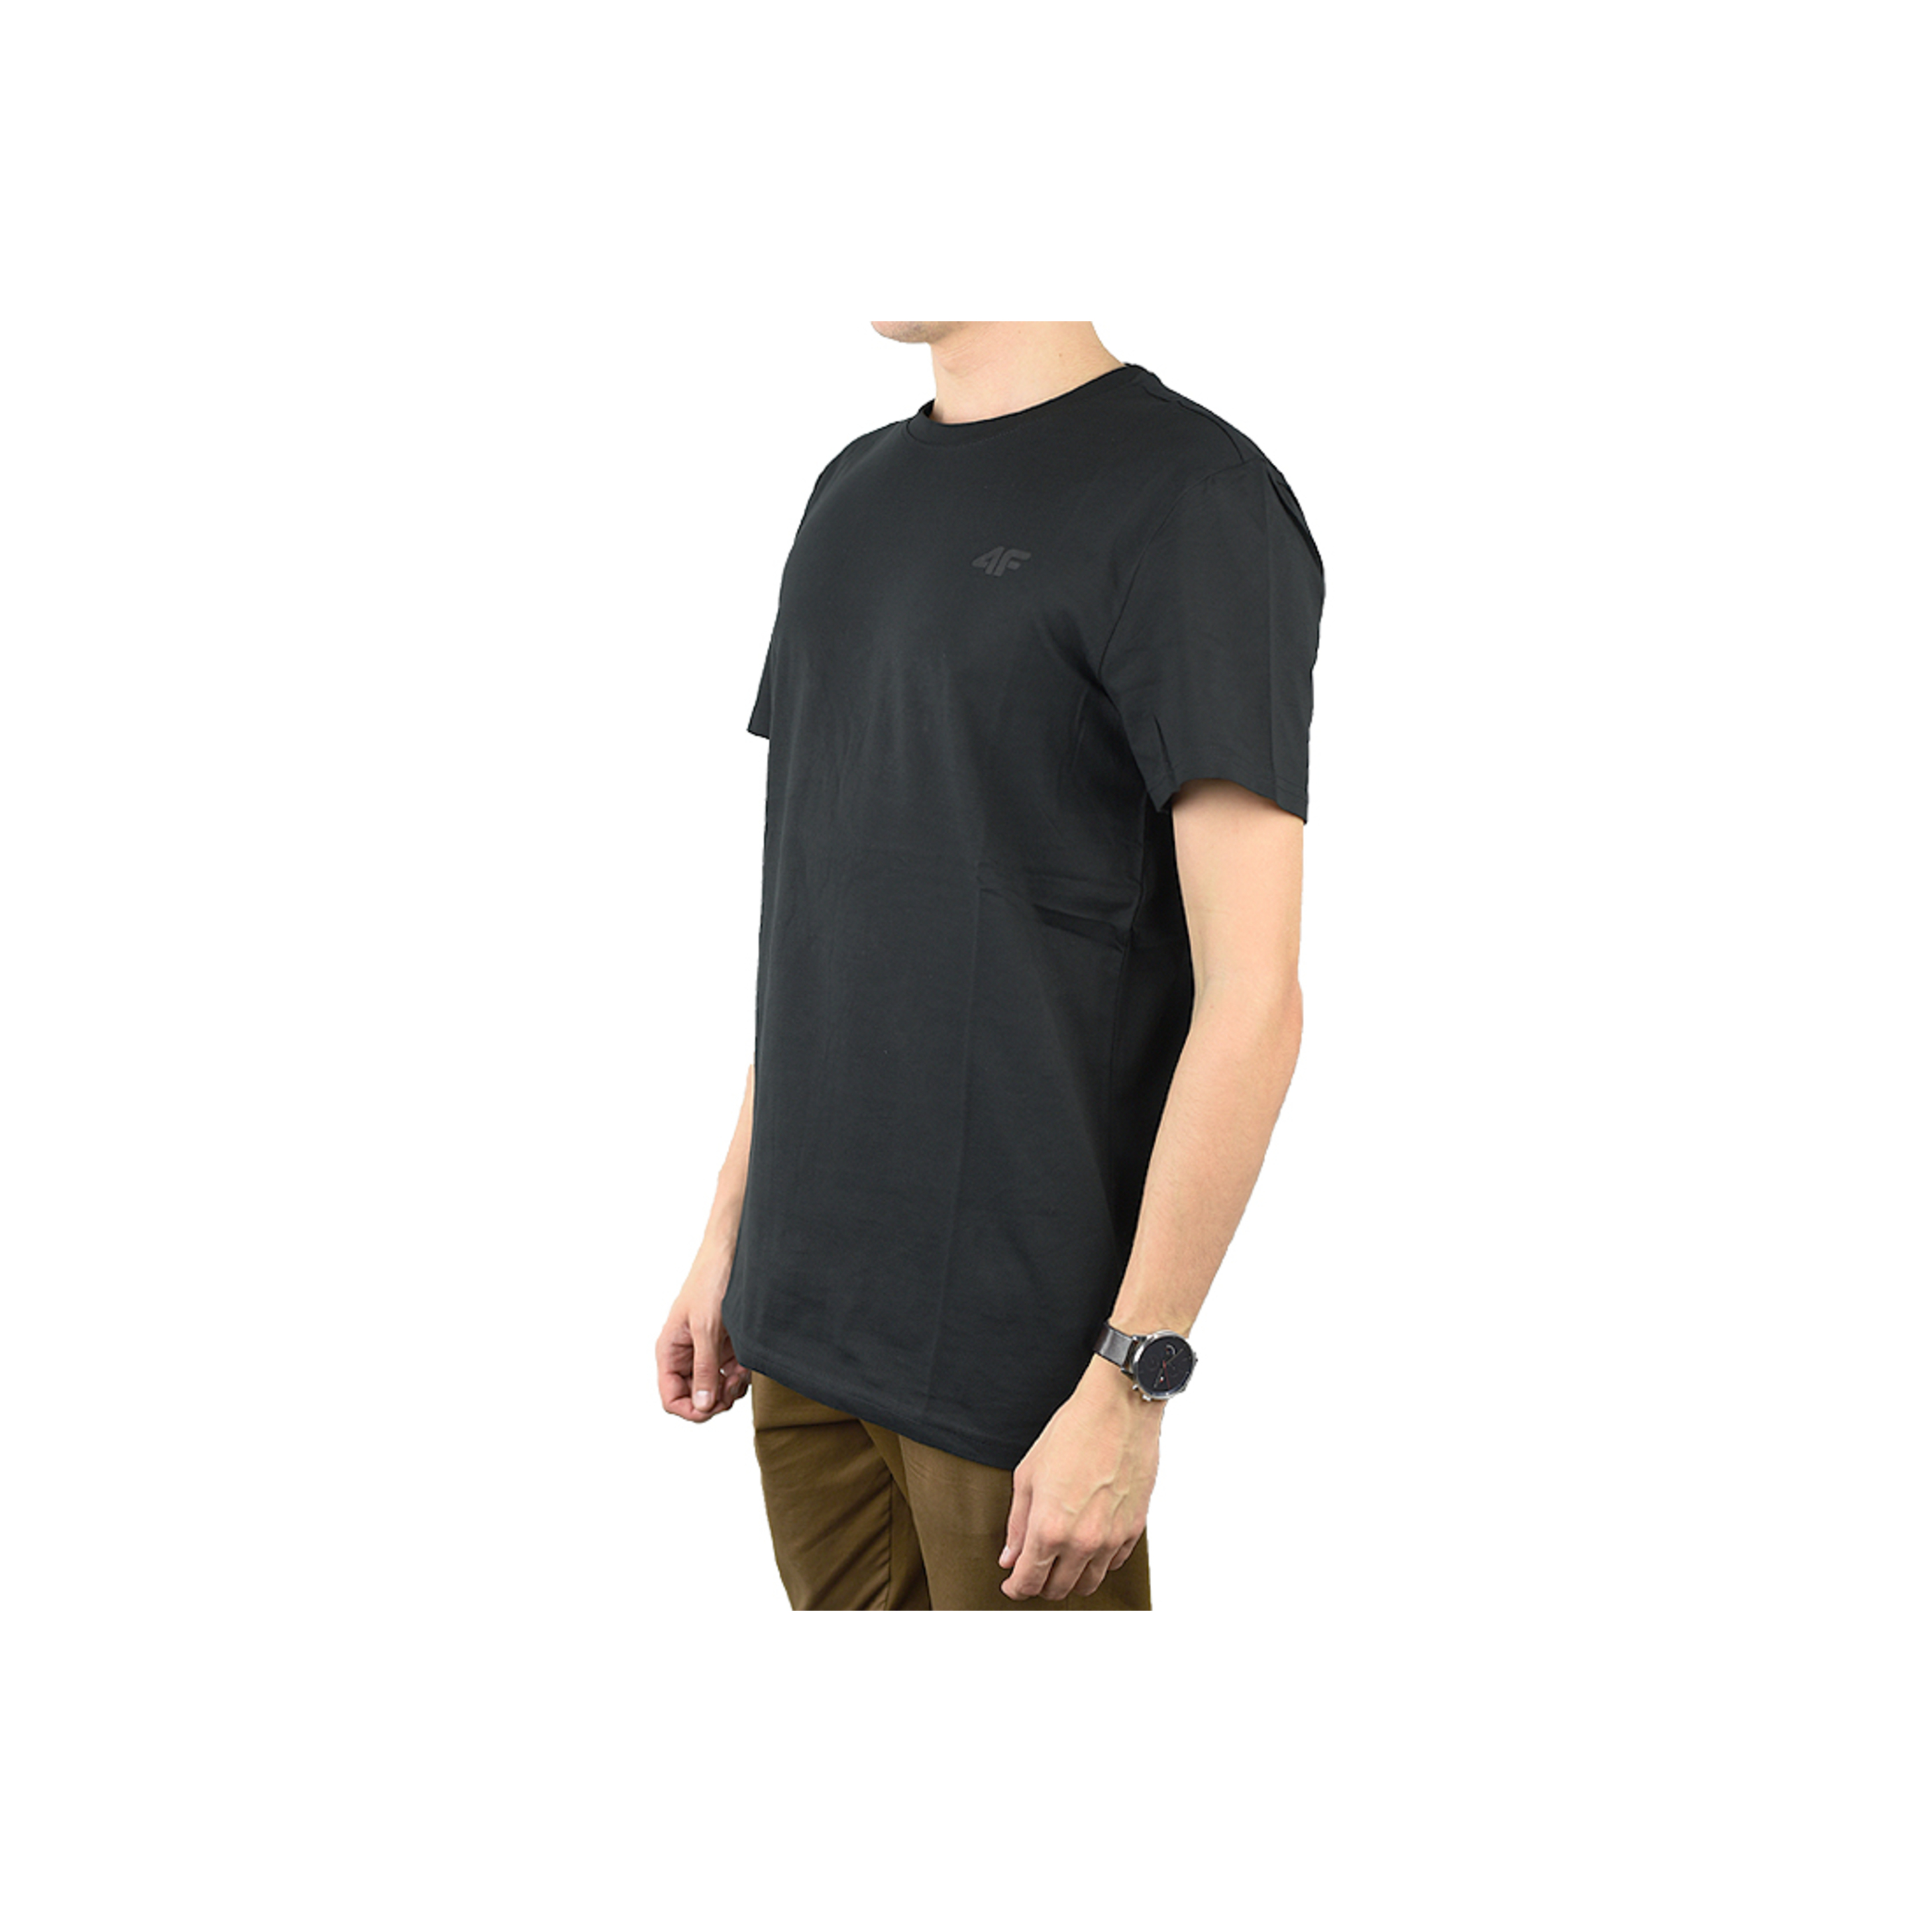 4f Men's T-shirt Nosh4-tsm003-20s